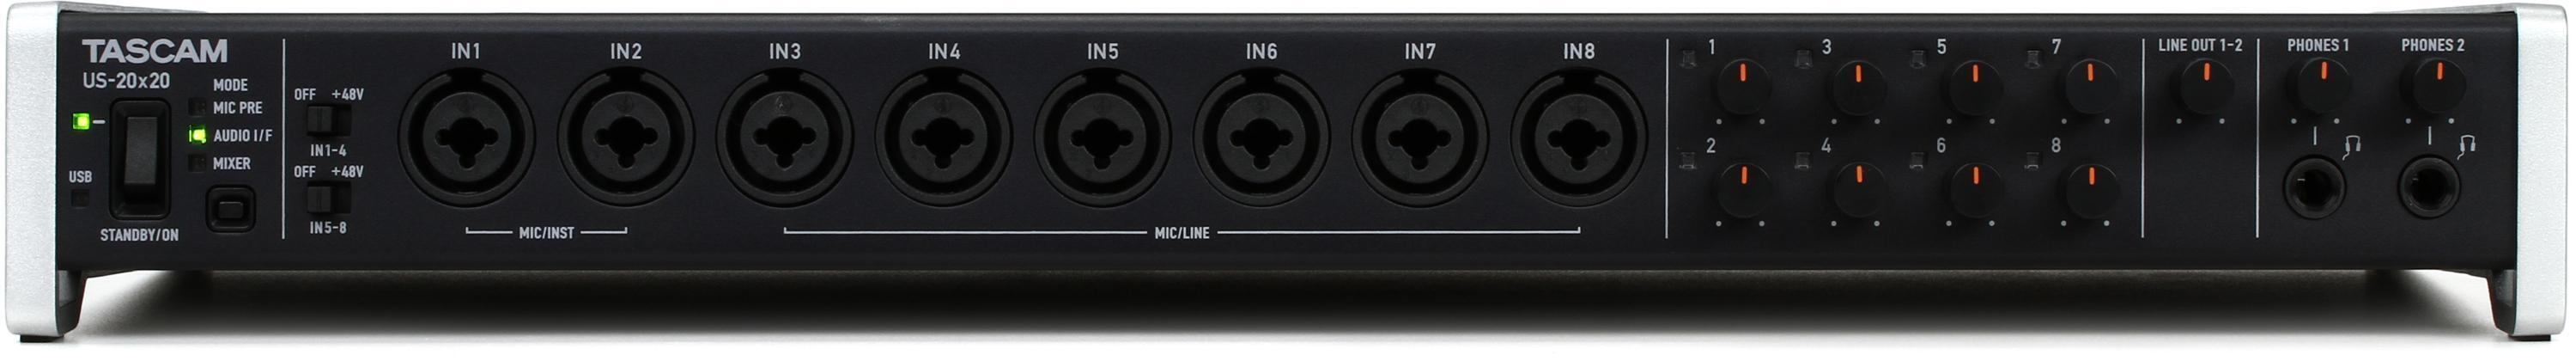 TASCAM Celesonic US-20x20 USB 3.0 Audio Interface